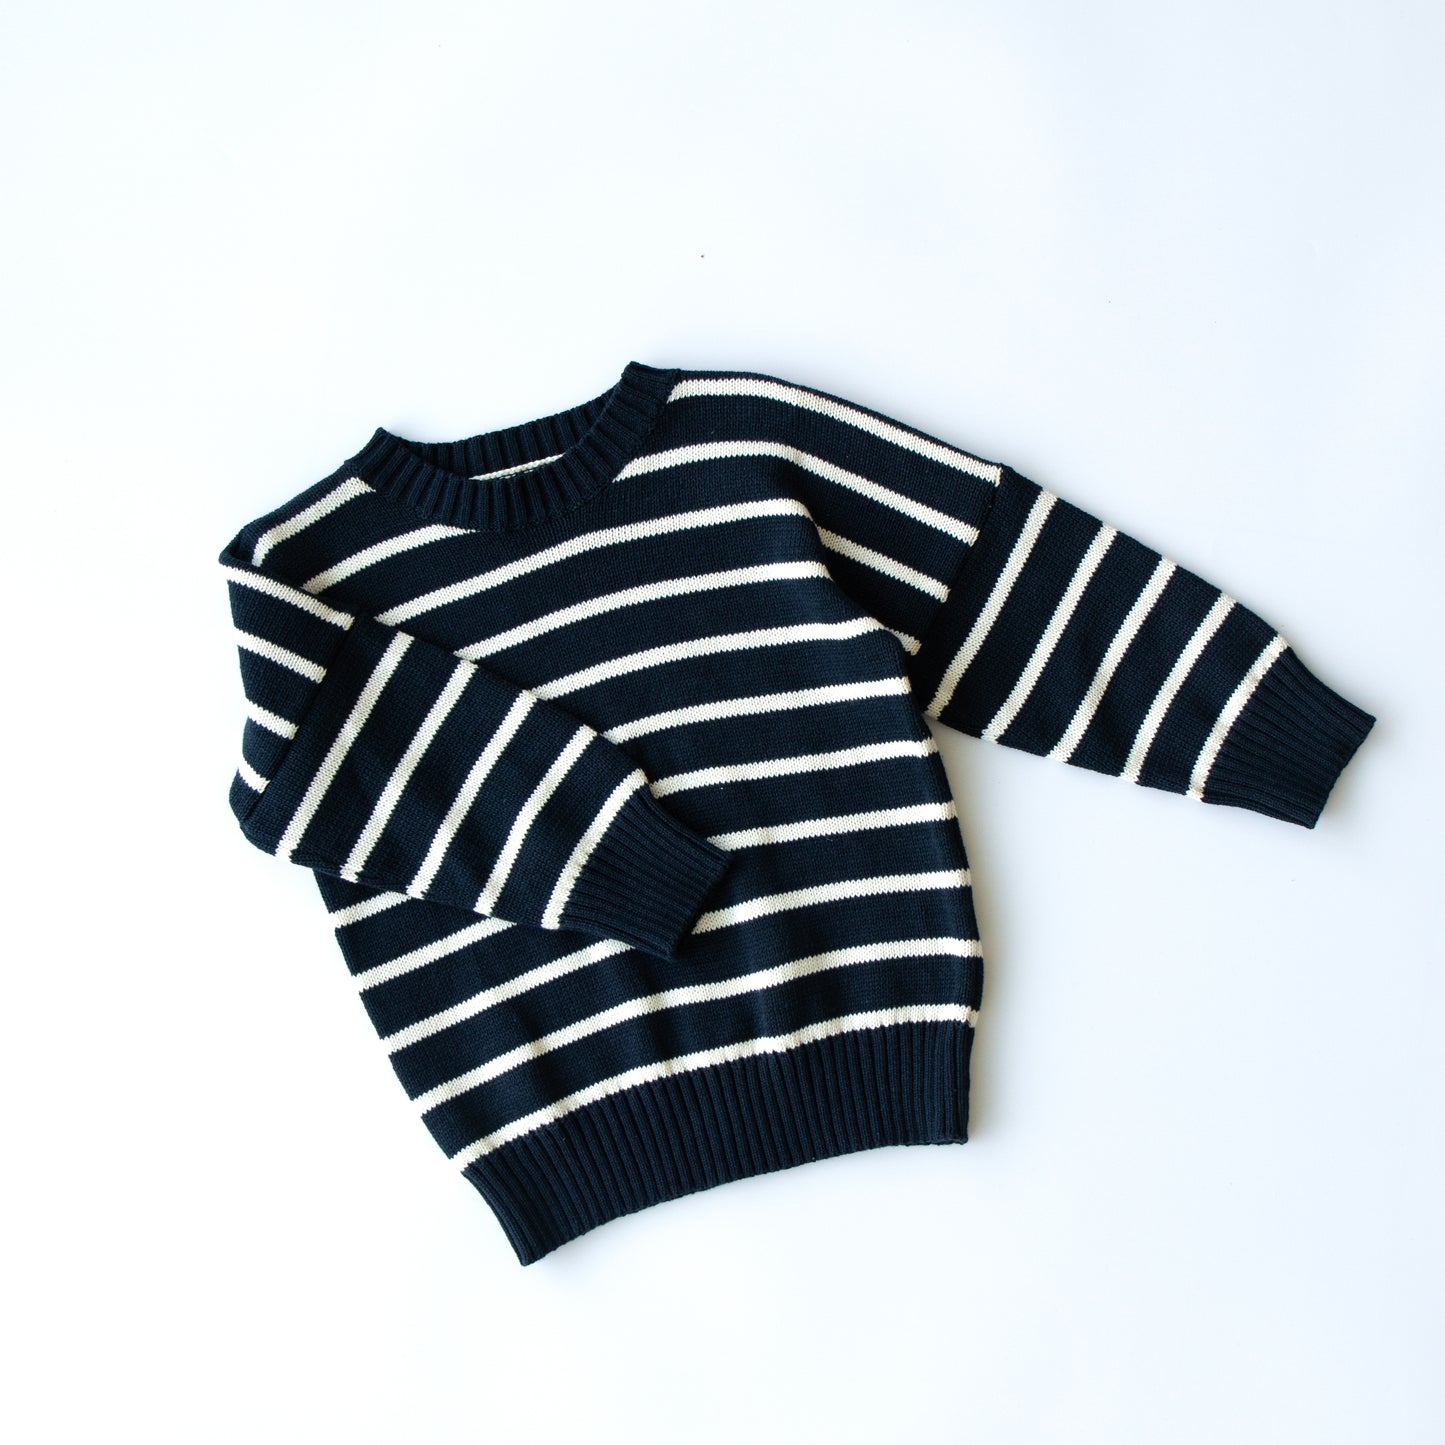 leon knit sweater - navy / white stripe